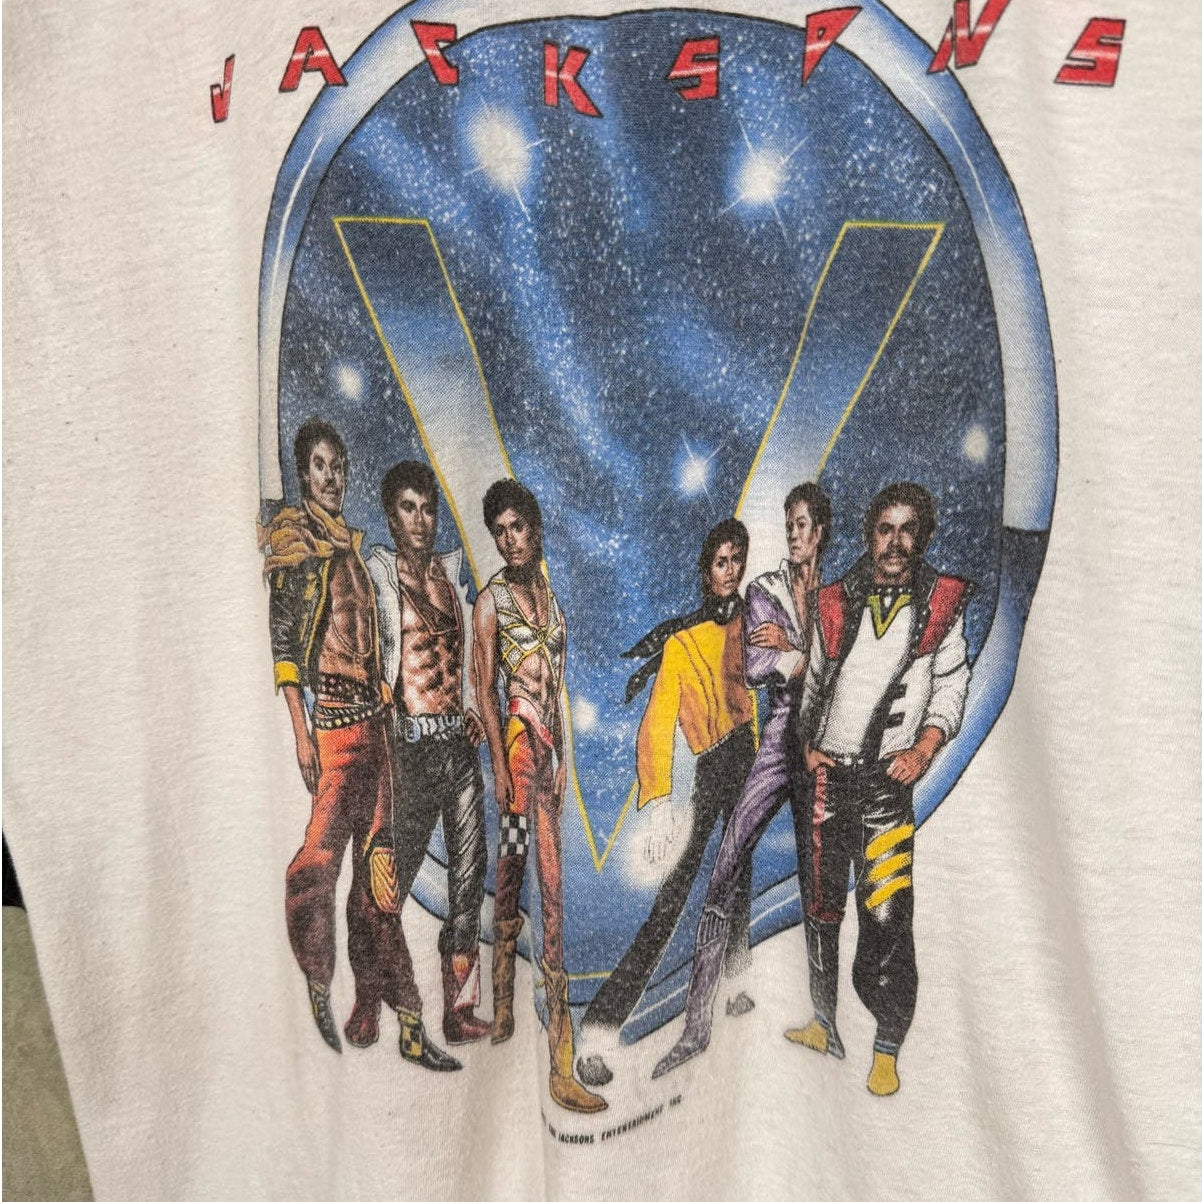 VTG 1984 Jackson 5 Band T Shirt Sz L